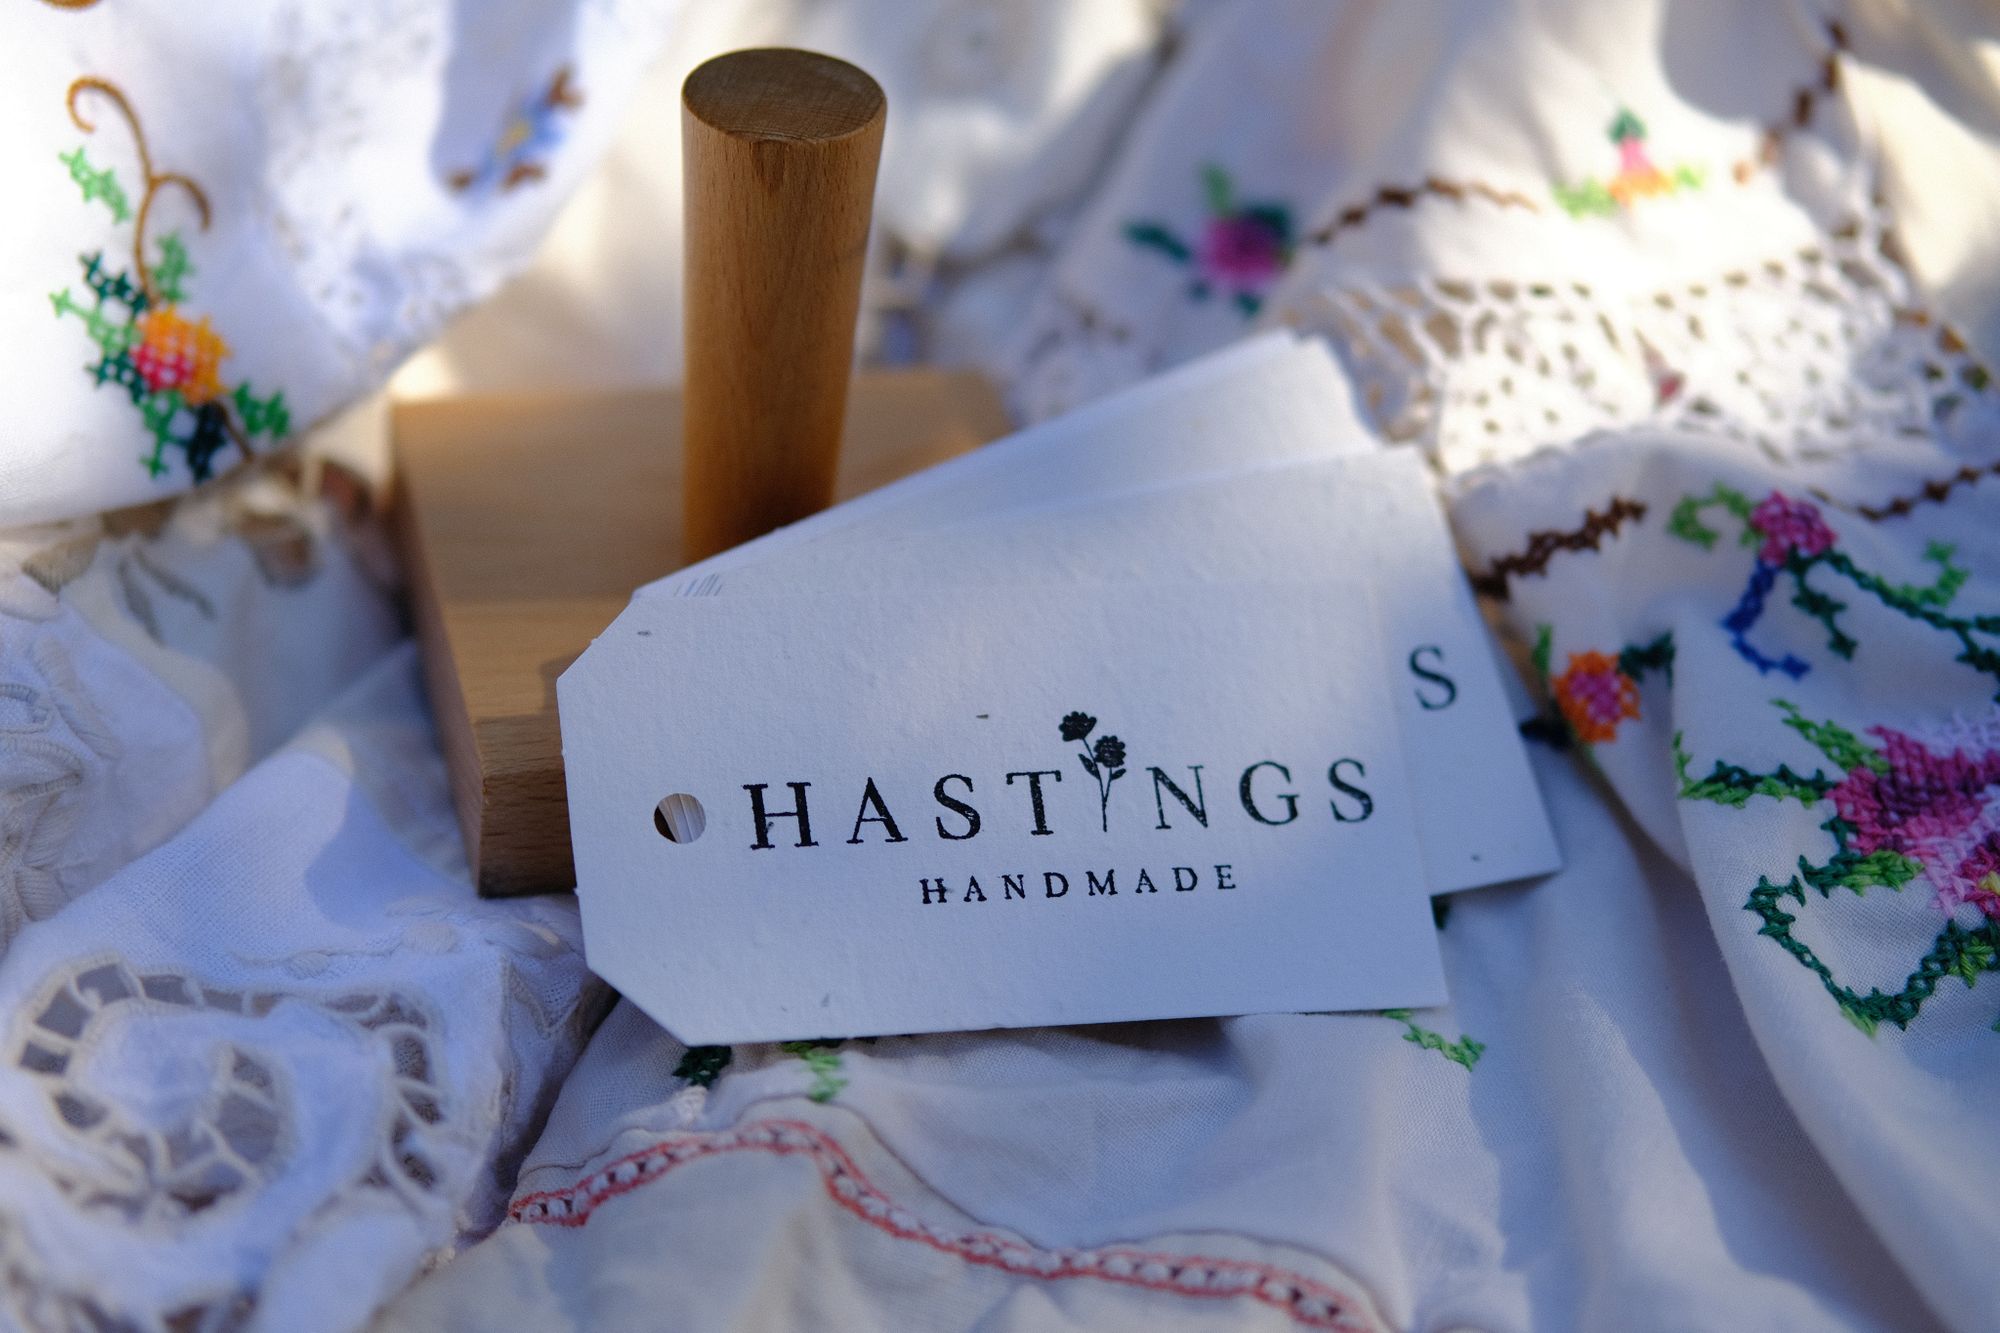 Hastings Handmade: Repurposing Vintage Textiles into Dresses that Tell Stories